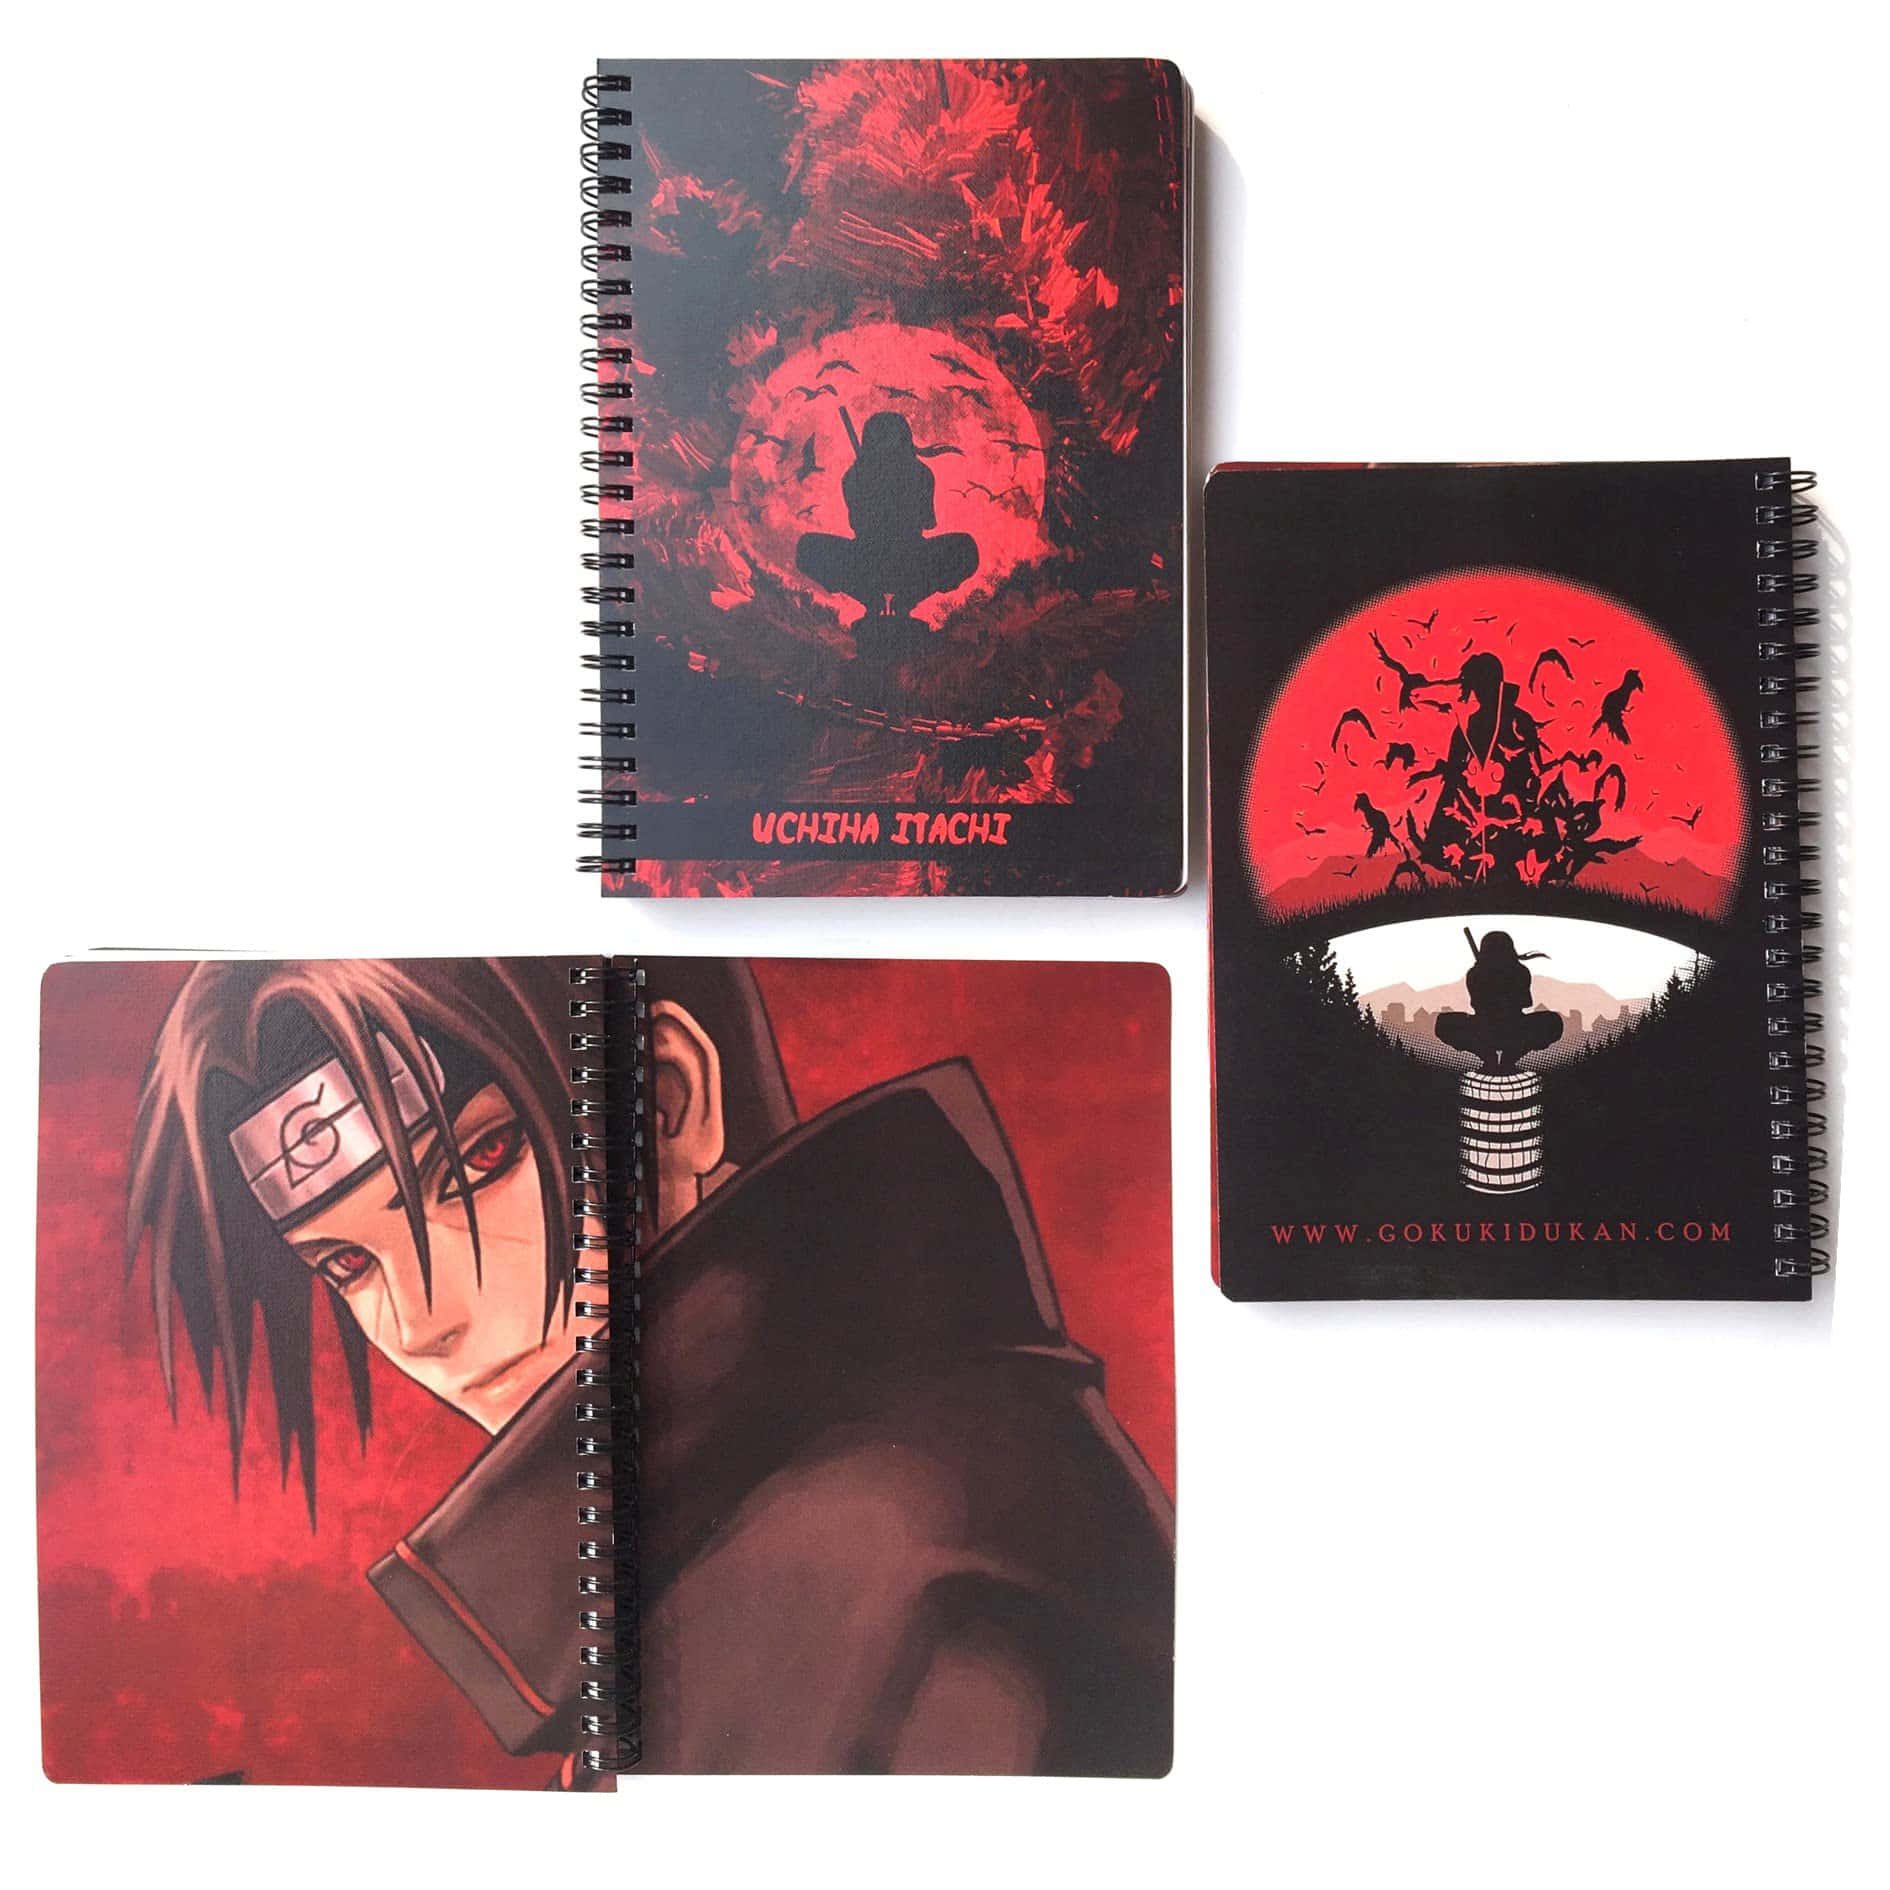 Itachi Uchiha Notebooks Cover Picture